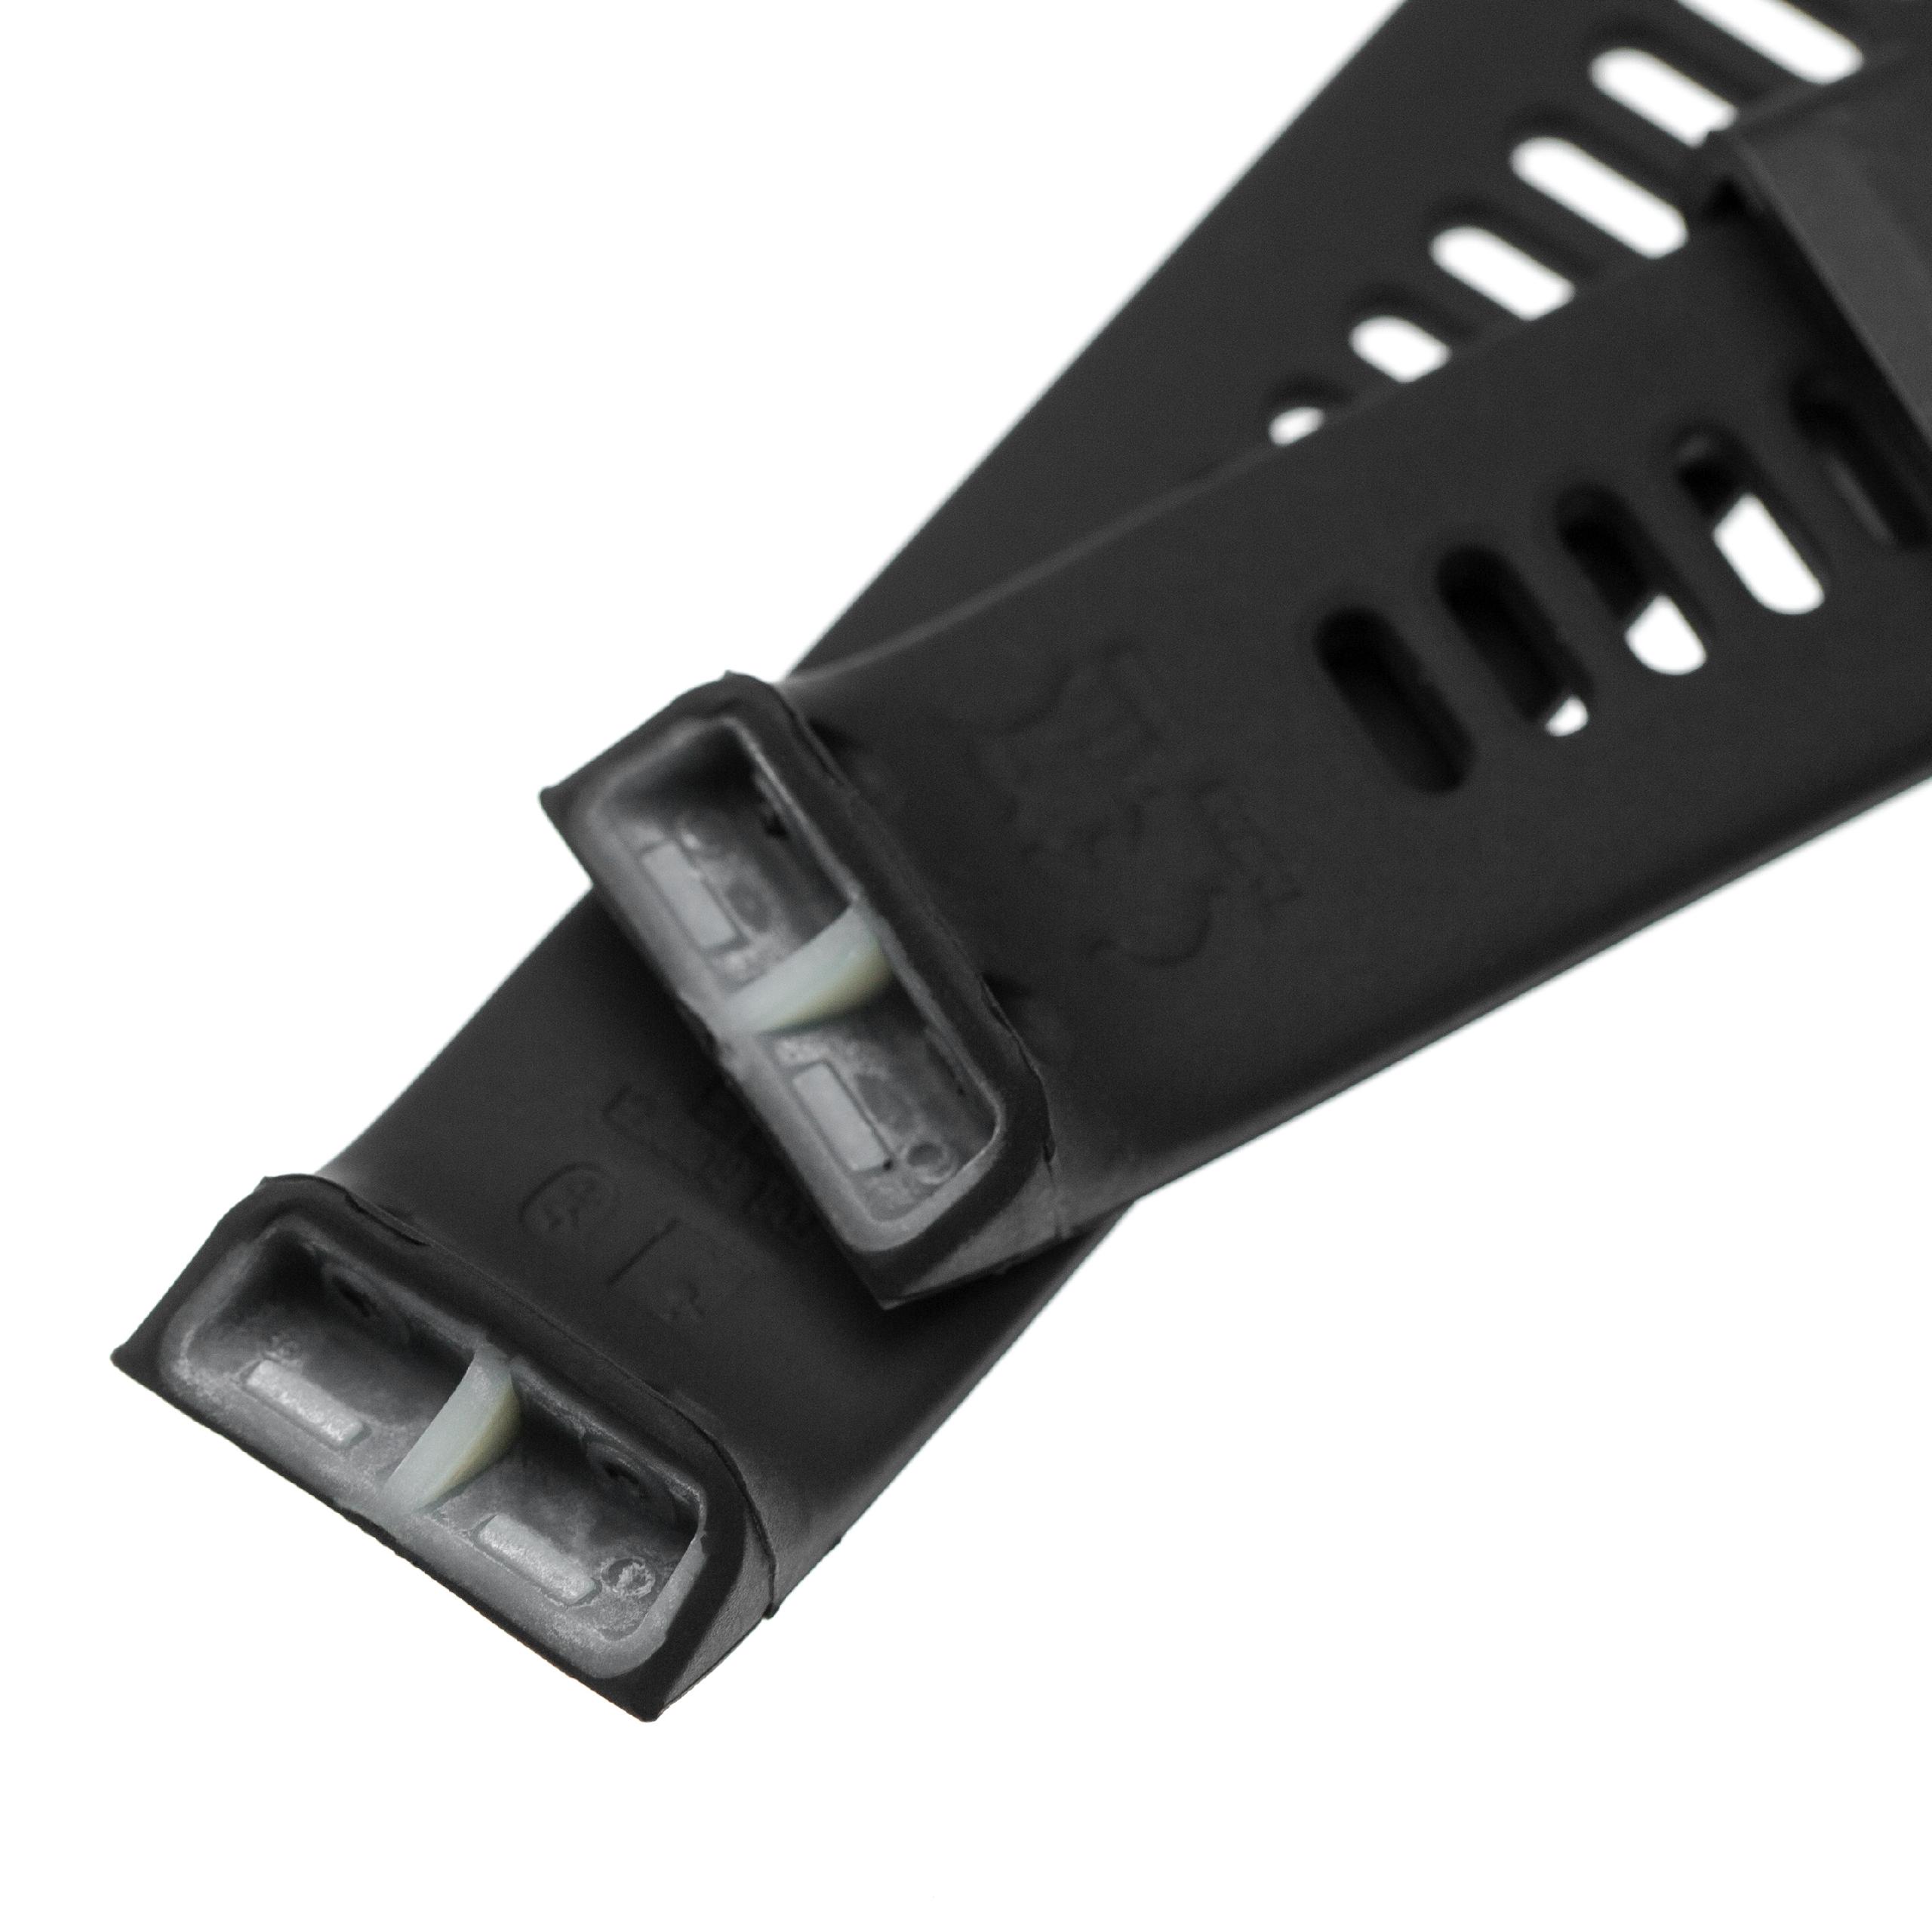 Pasek do smartwatch Garmin Forerunner - dł. 13,5 + 9,4 cm, szer. 23 mm, silikon, czarny